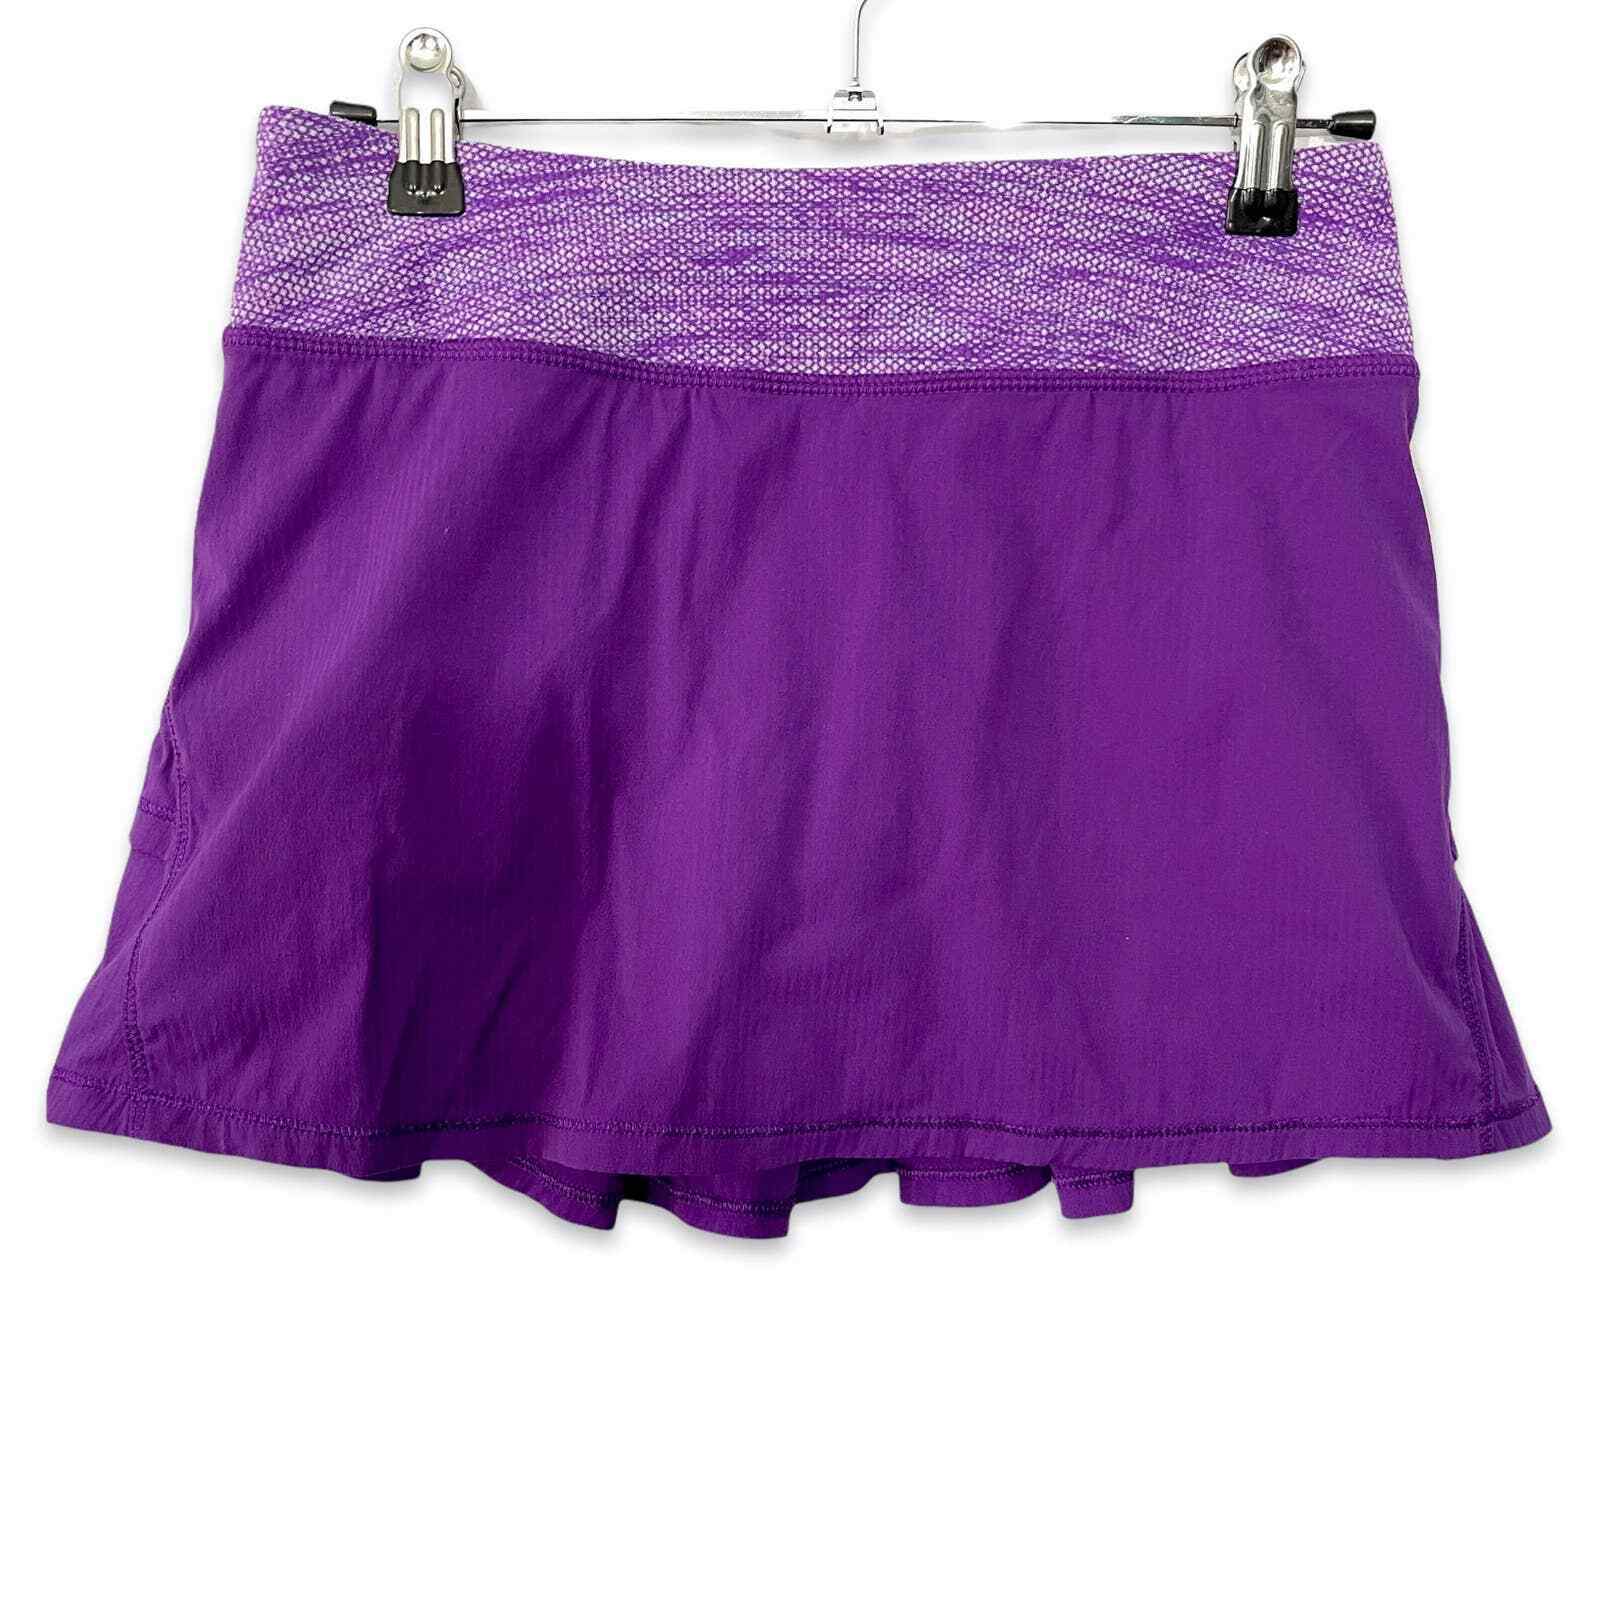 Ivivva Purple Wide Waistband Ruffle Pleated Athletic Skort Skirt Girls Size 12